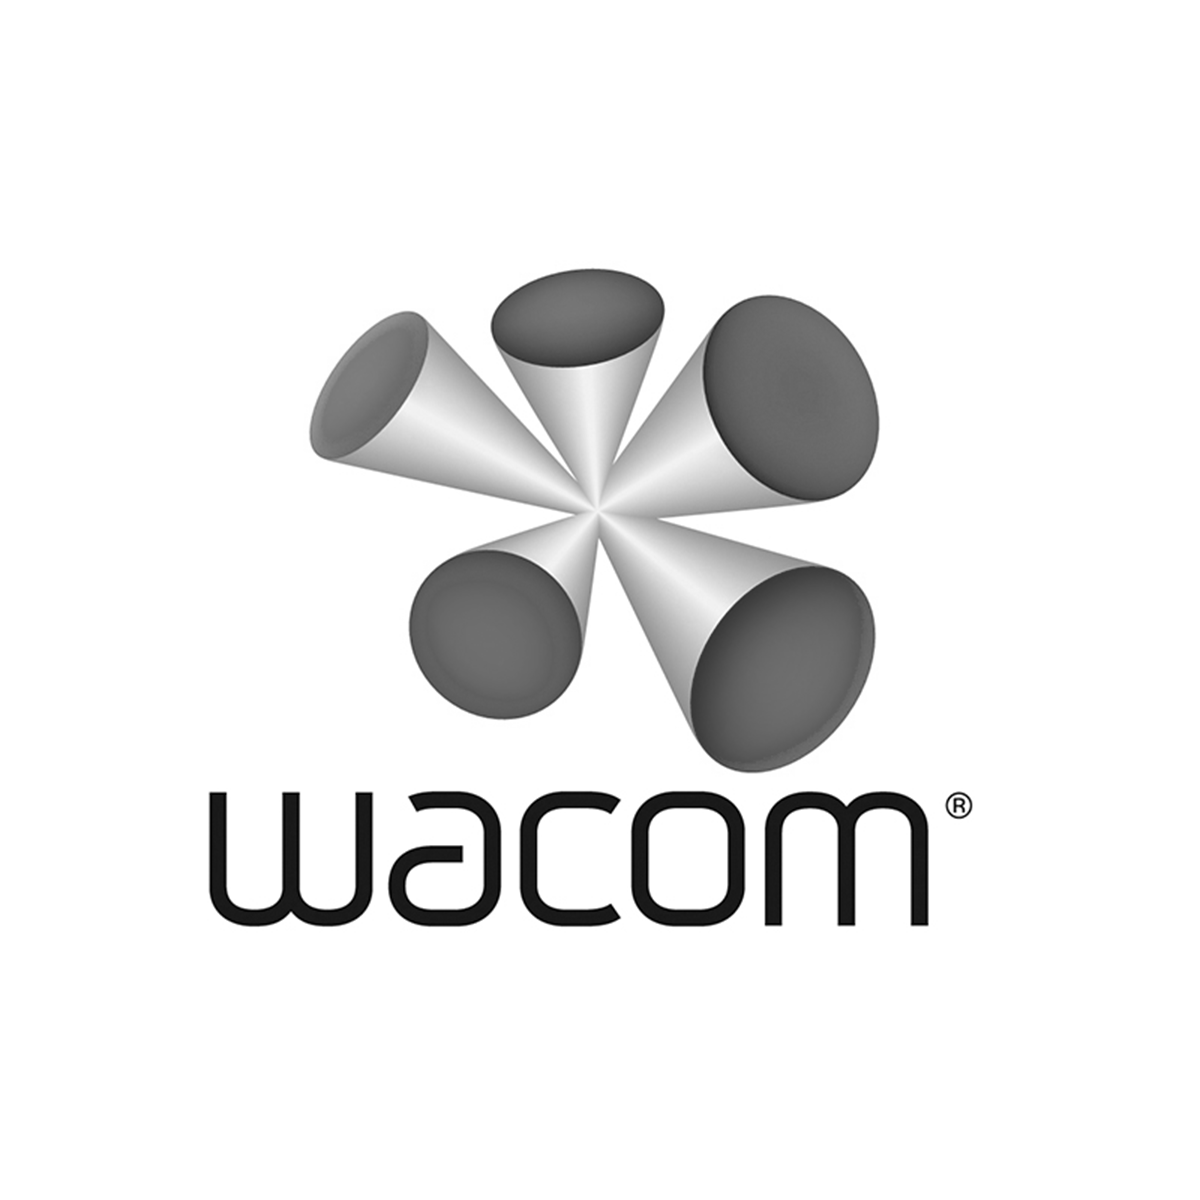 wacom-logojpg-final.png